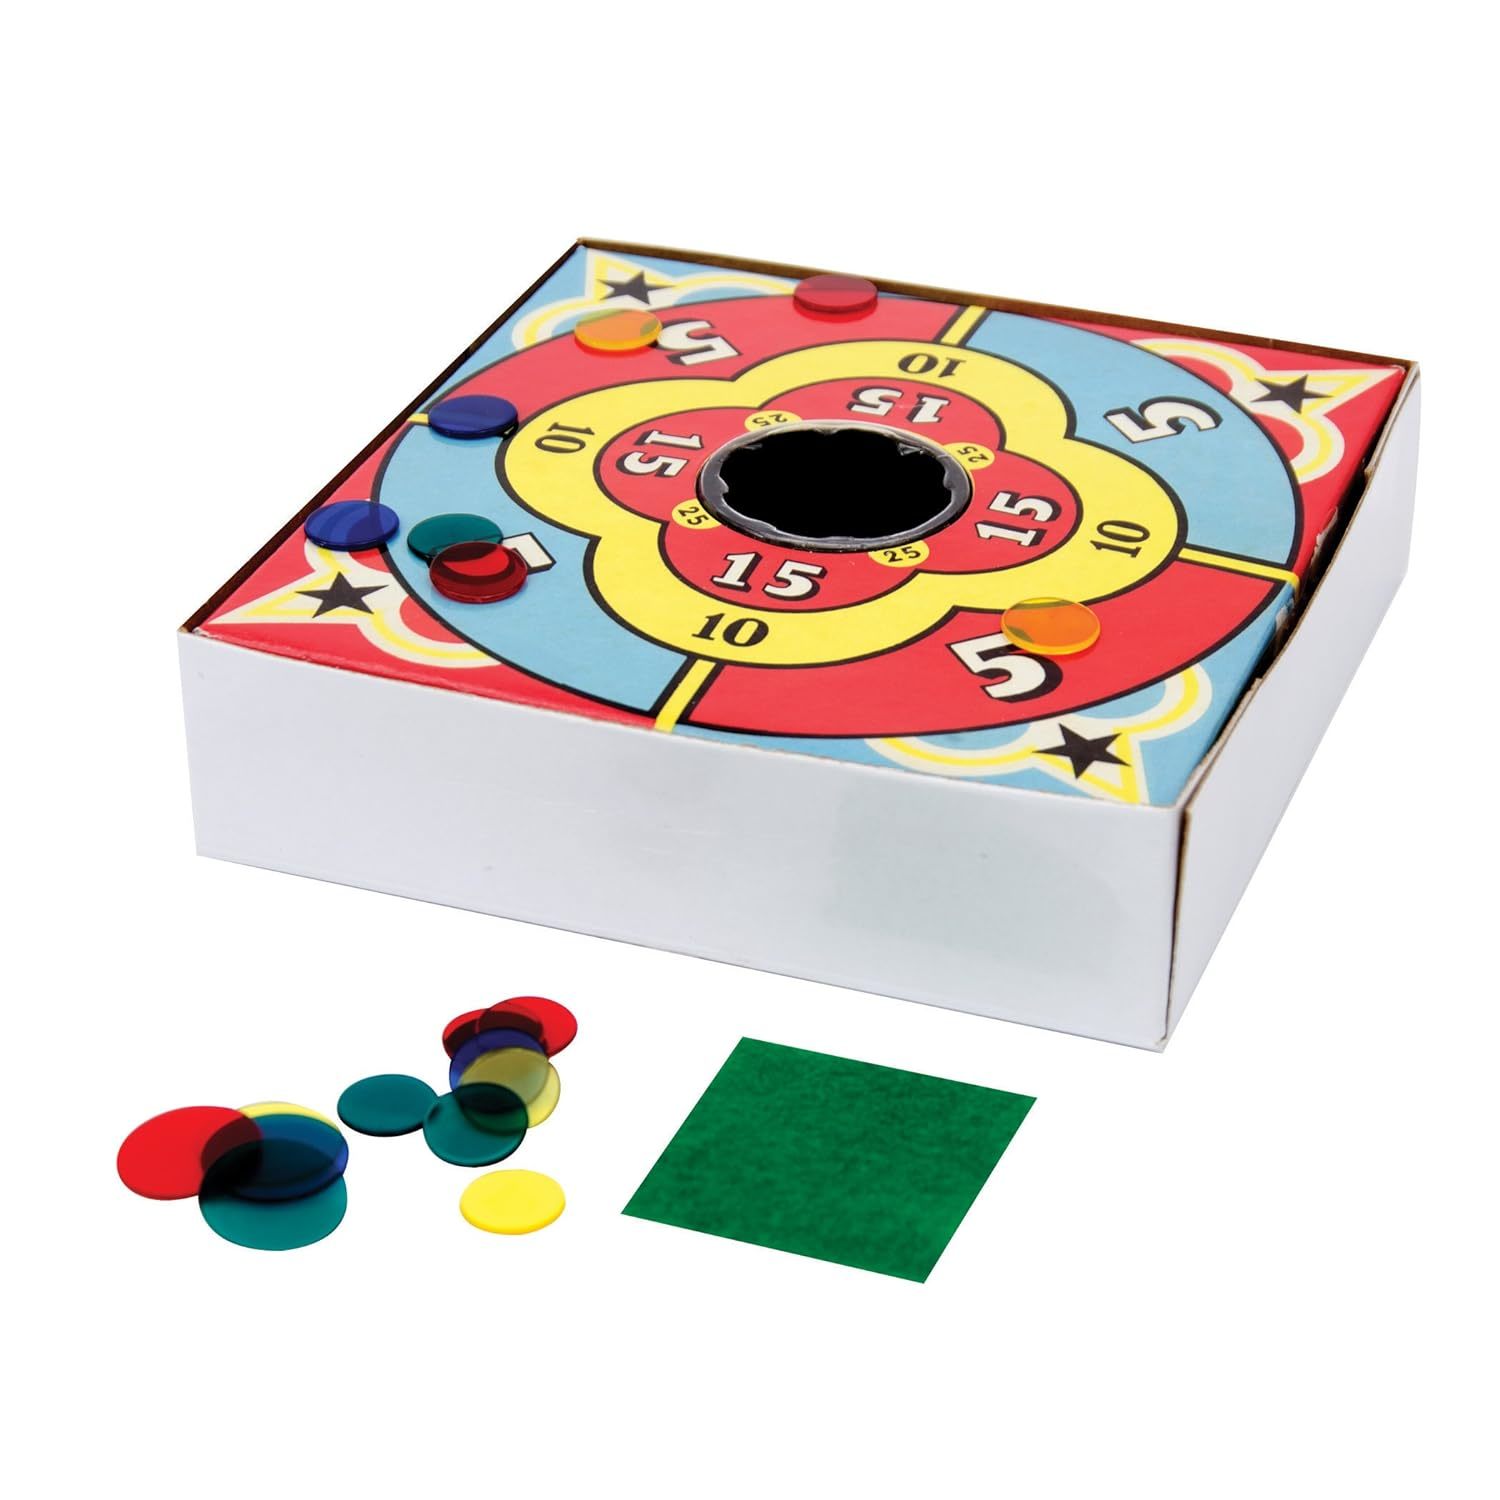 Schylling Tiddledy Winks Board Game - $17.99